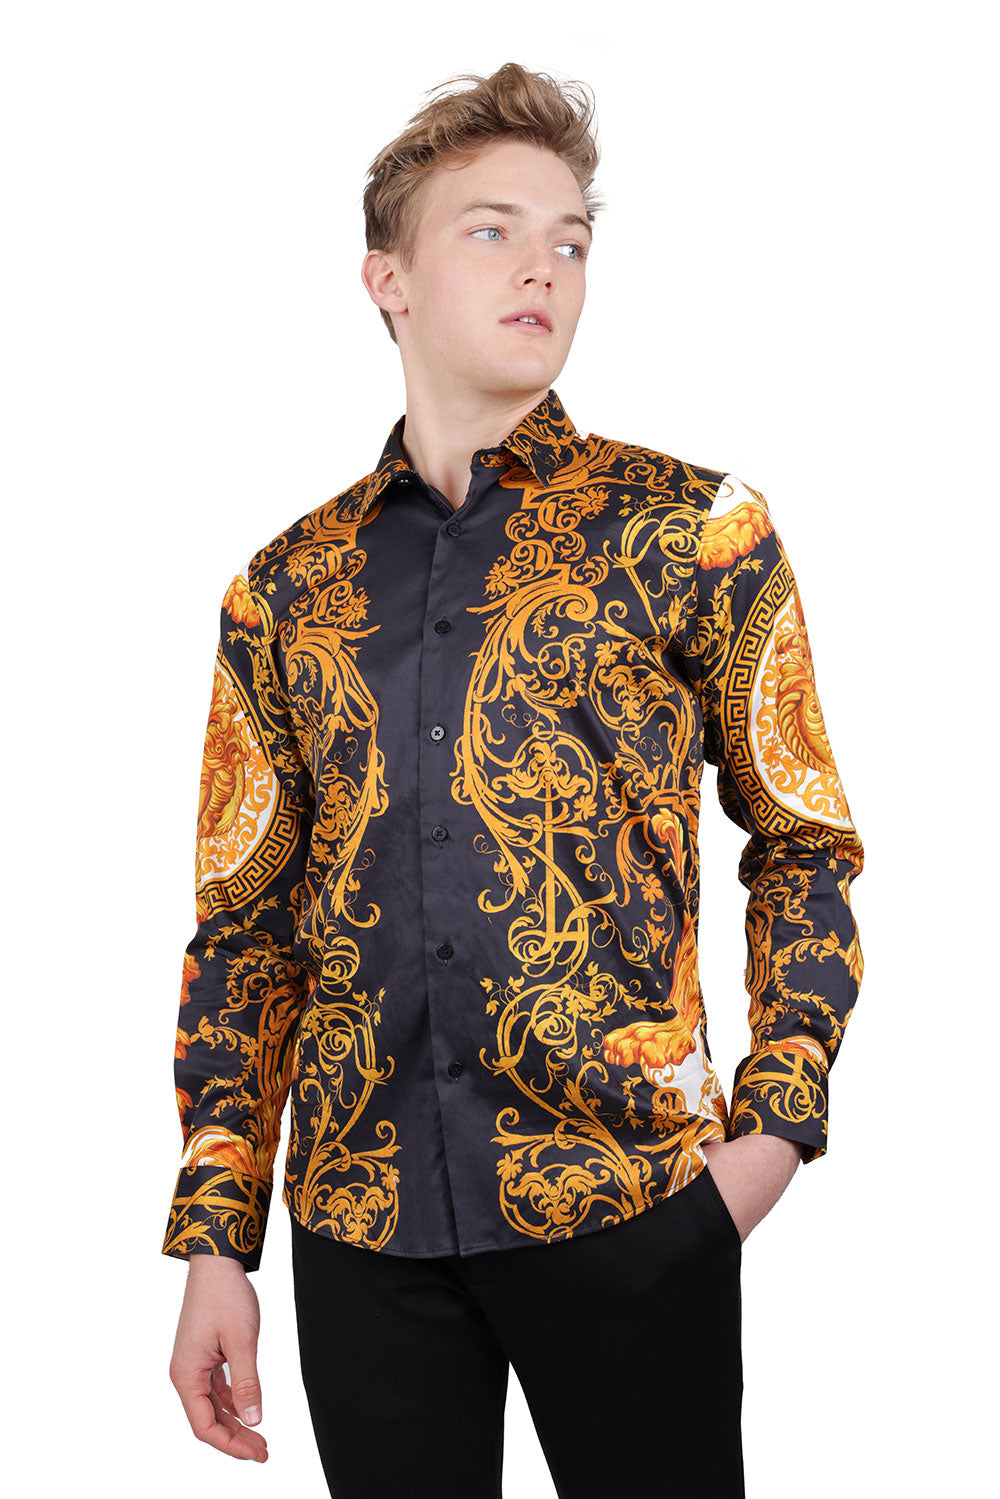 BARABAS Men Medusa Floral Print Design Button Down Luxury Shirt SPR265 Black